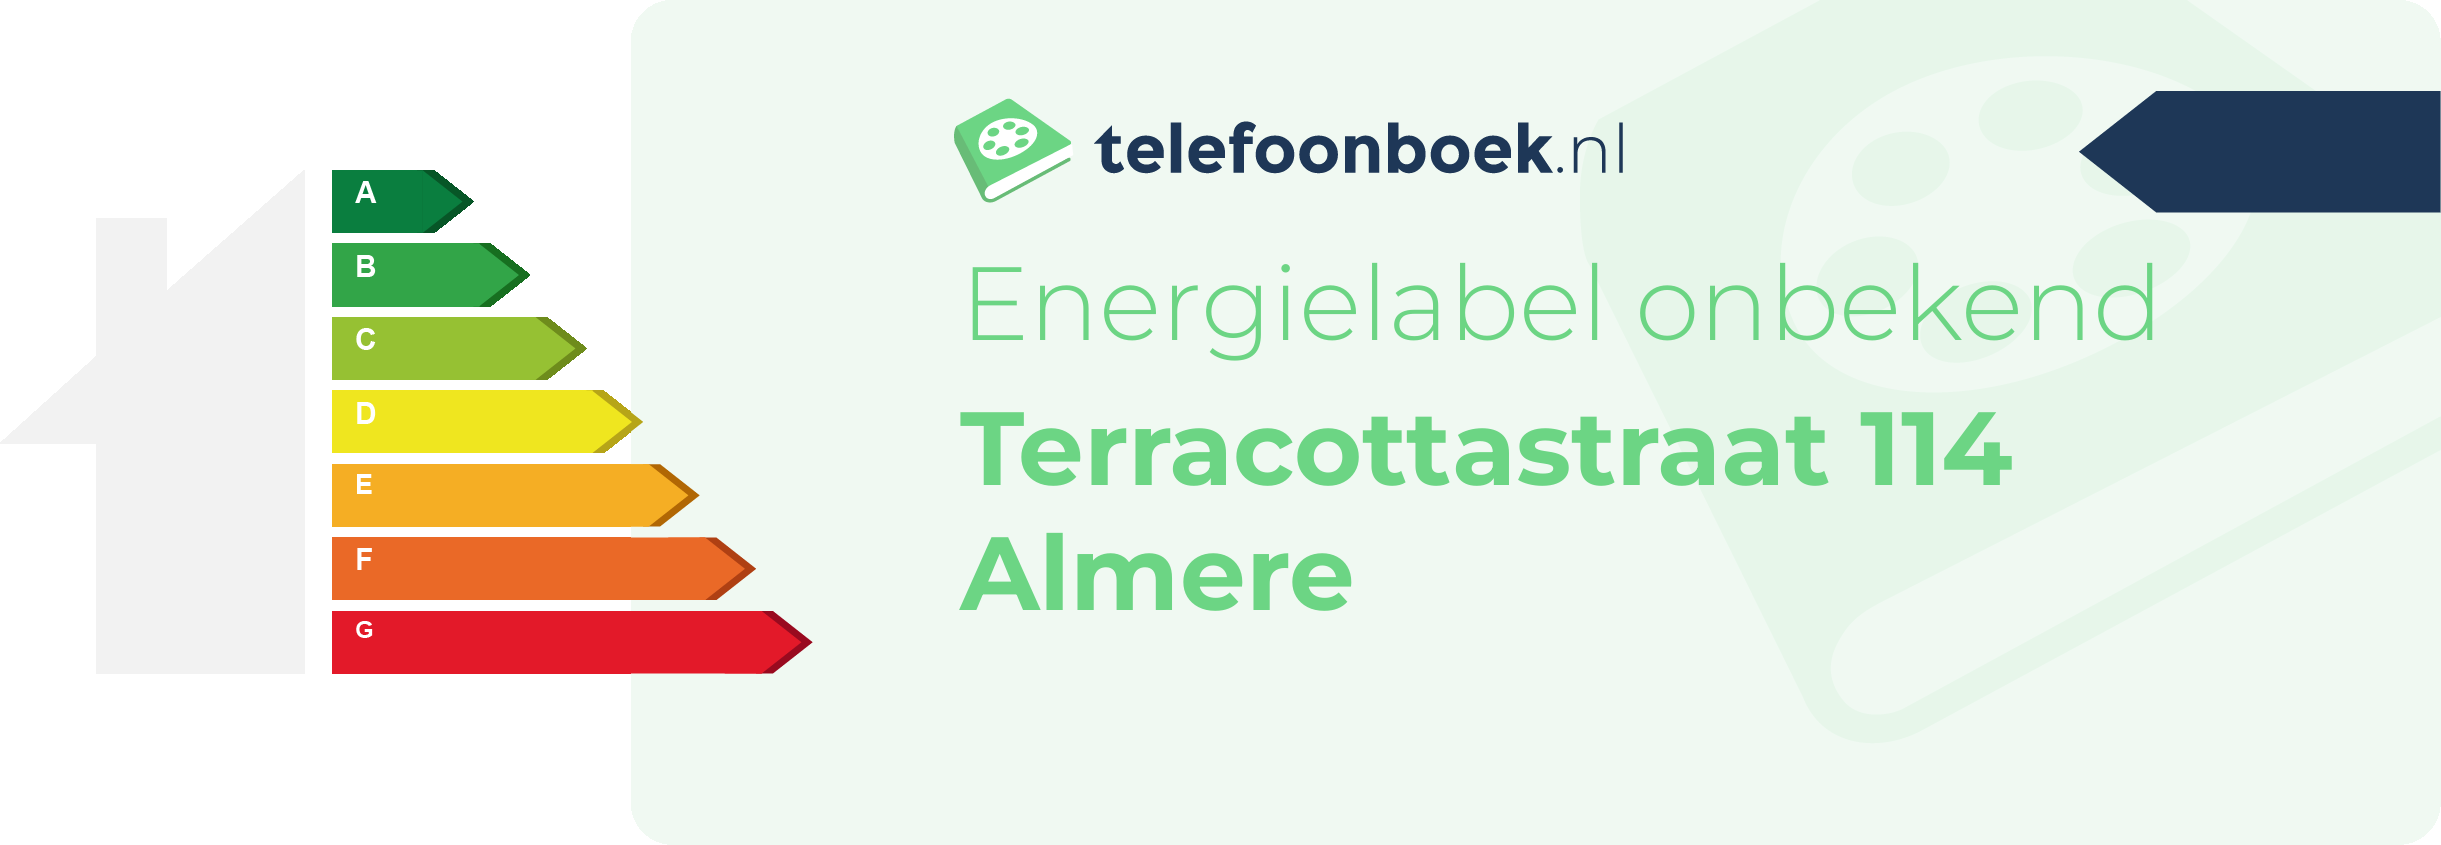 Energielabel Terracottastraat 114 Almere